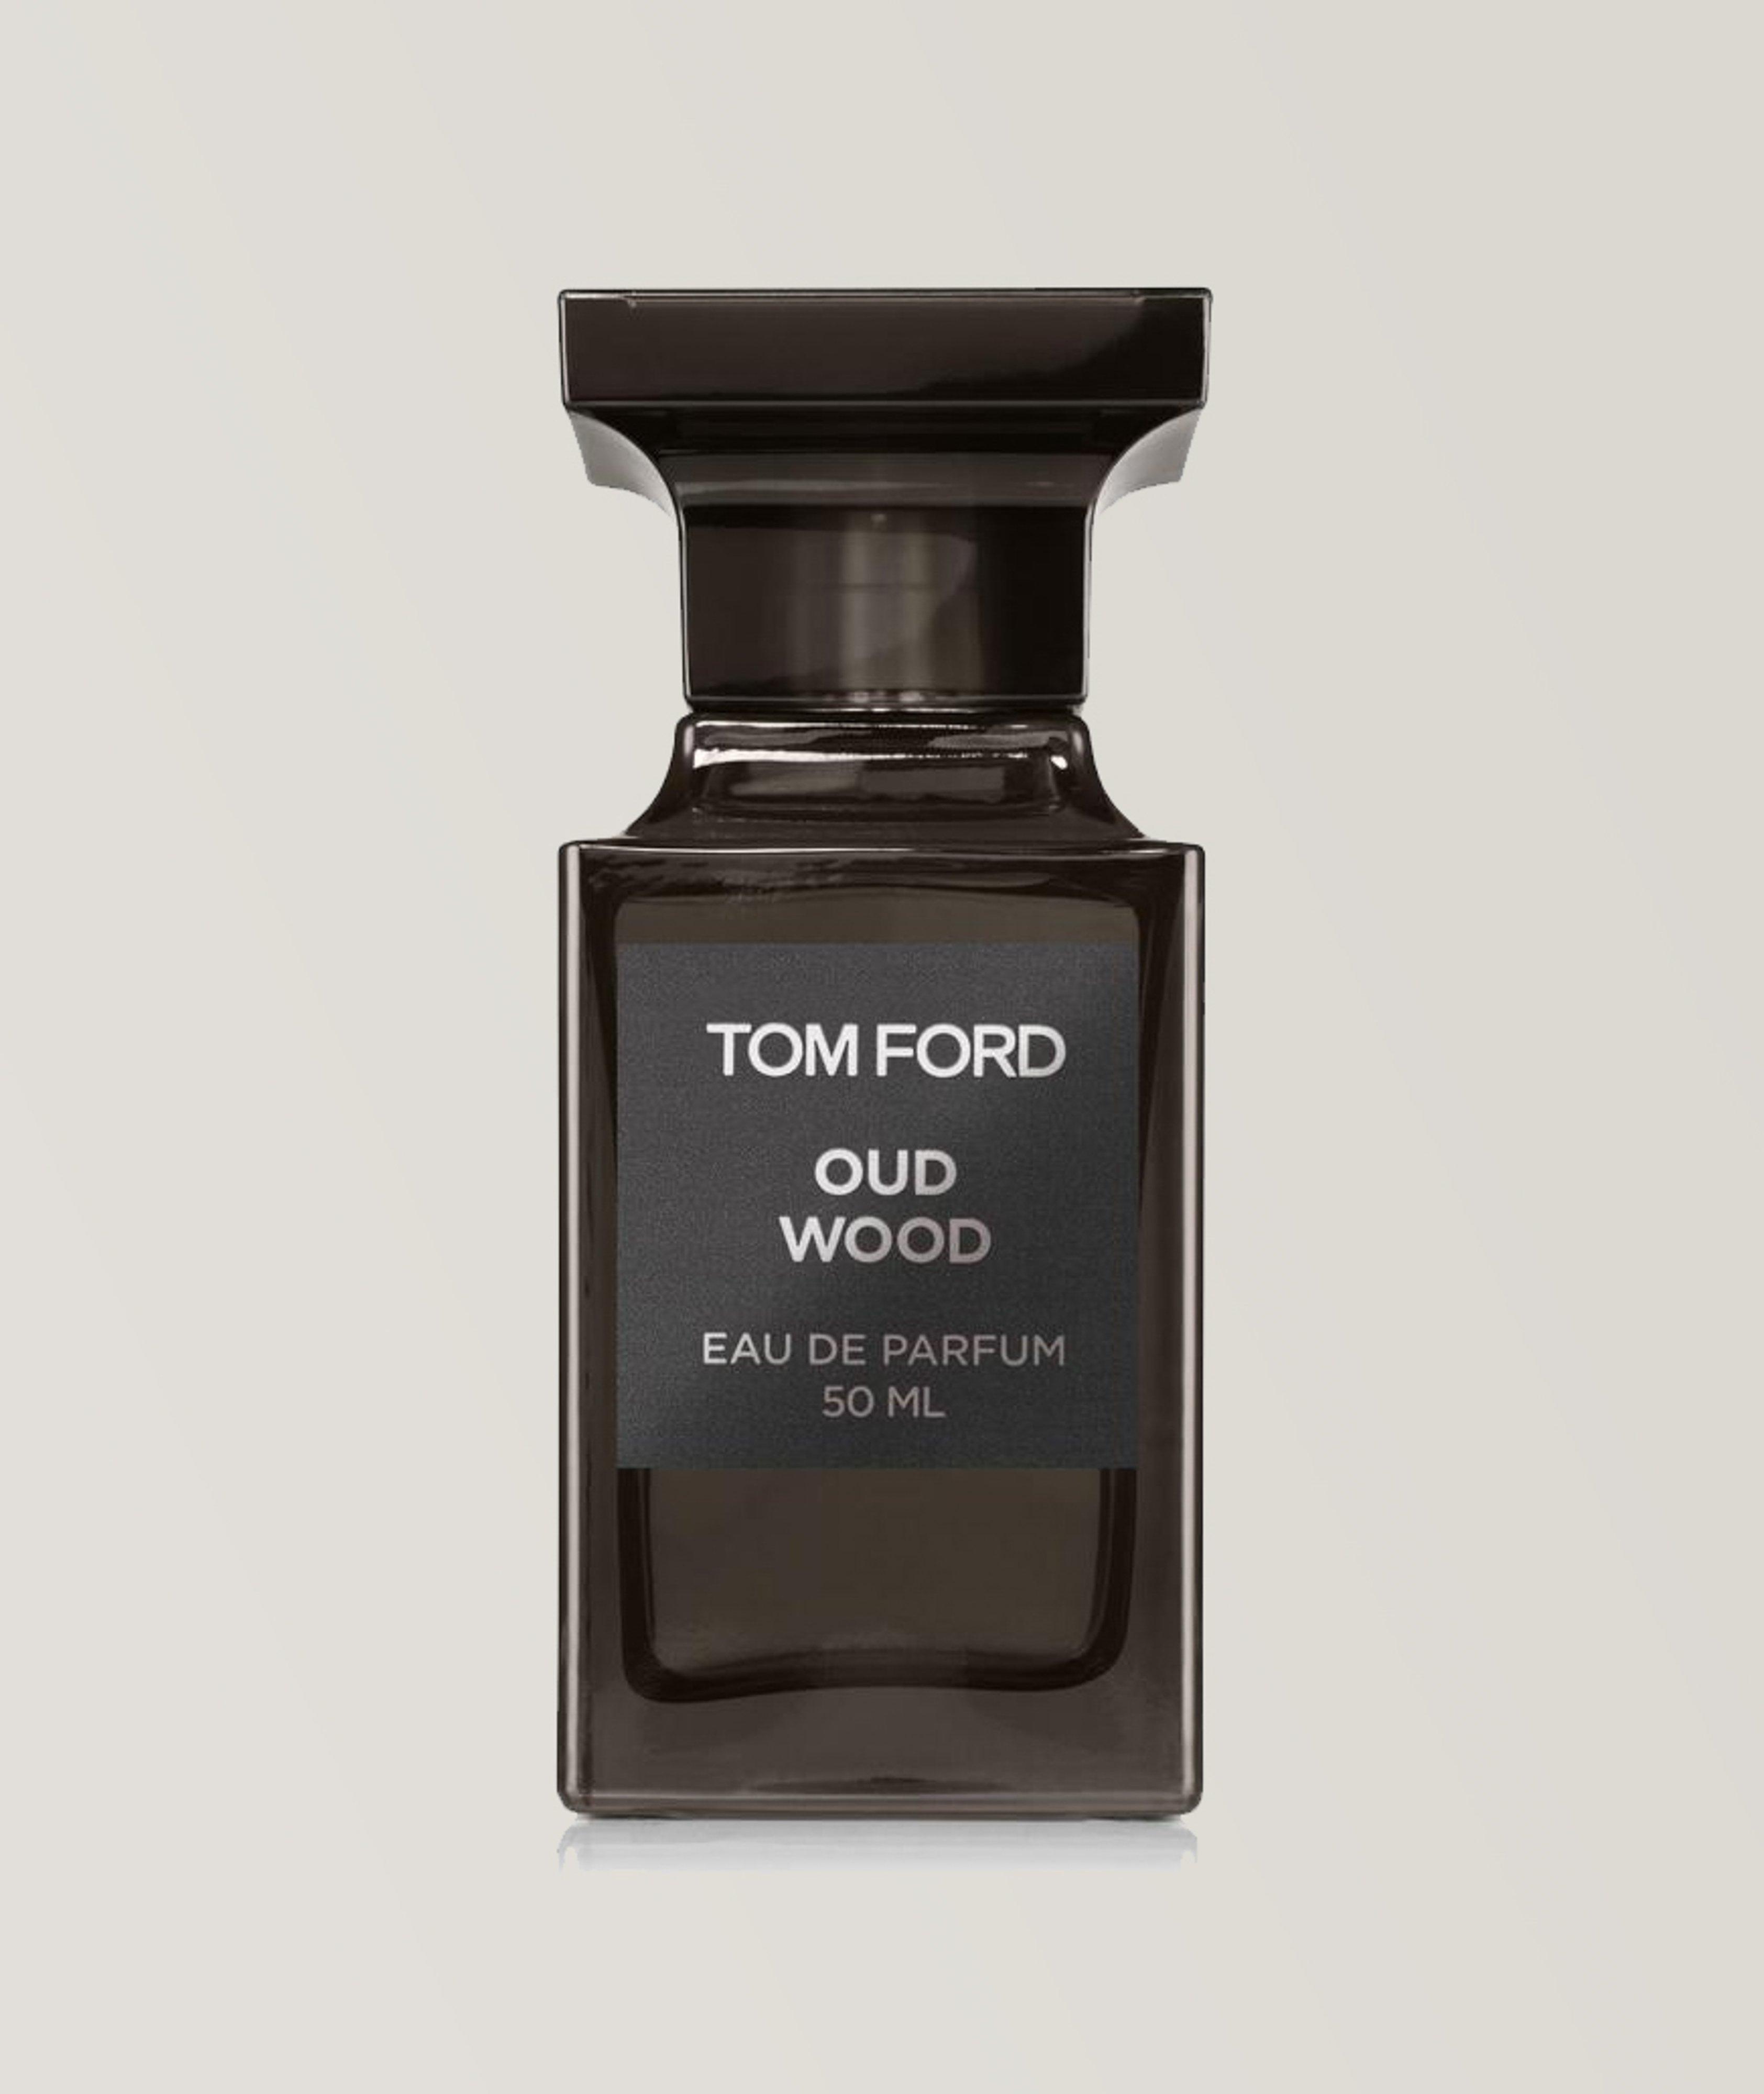 TOM FORD Eau de parfum Oud Wood (50 ml)